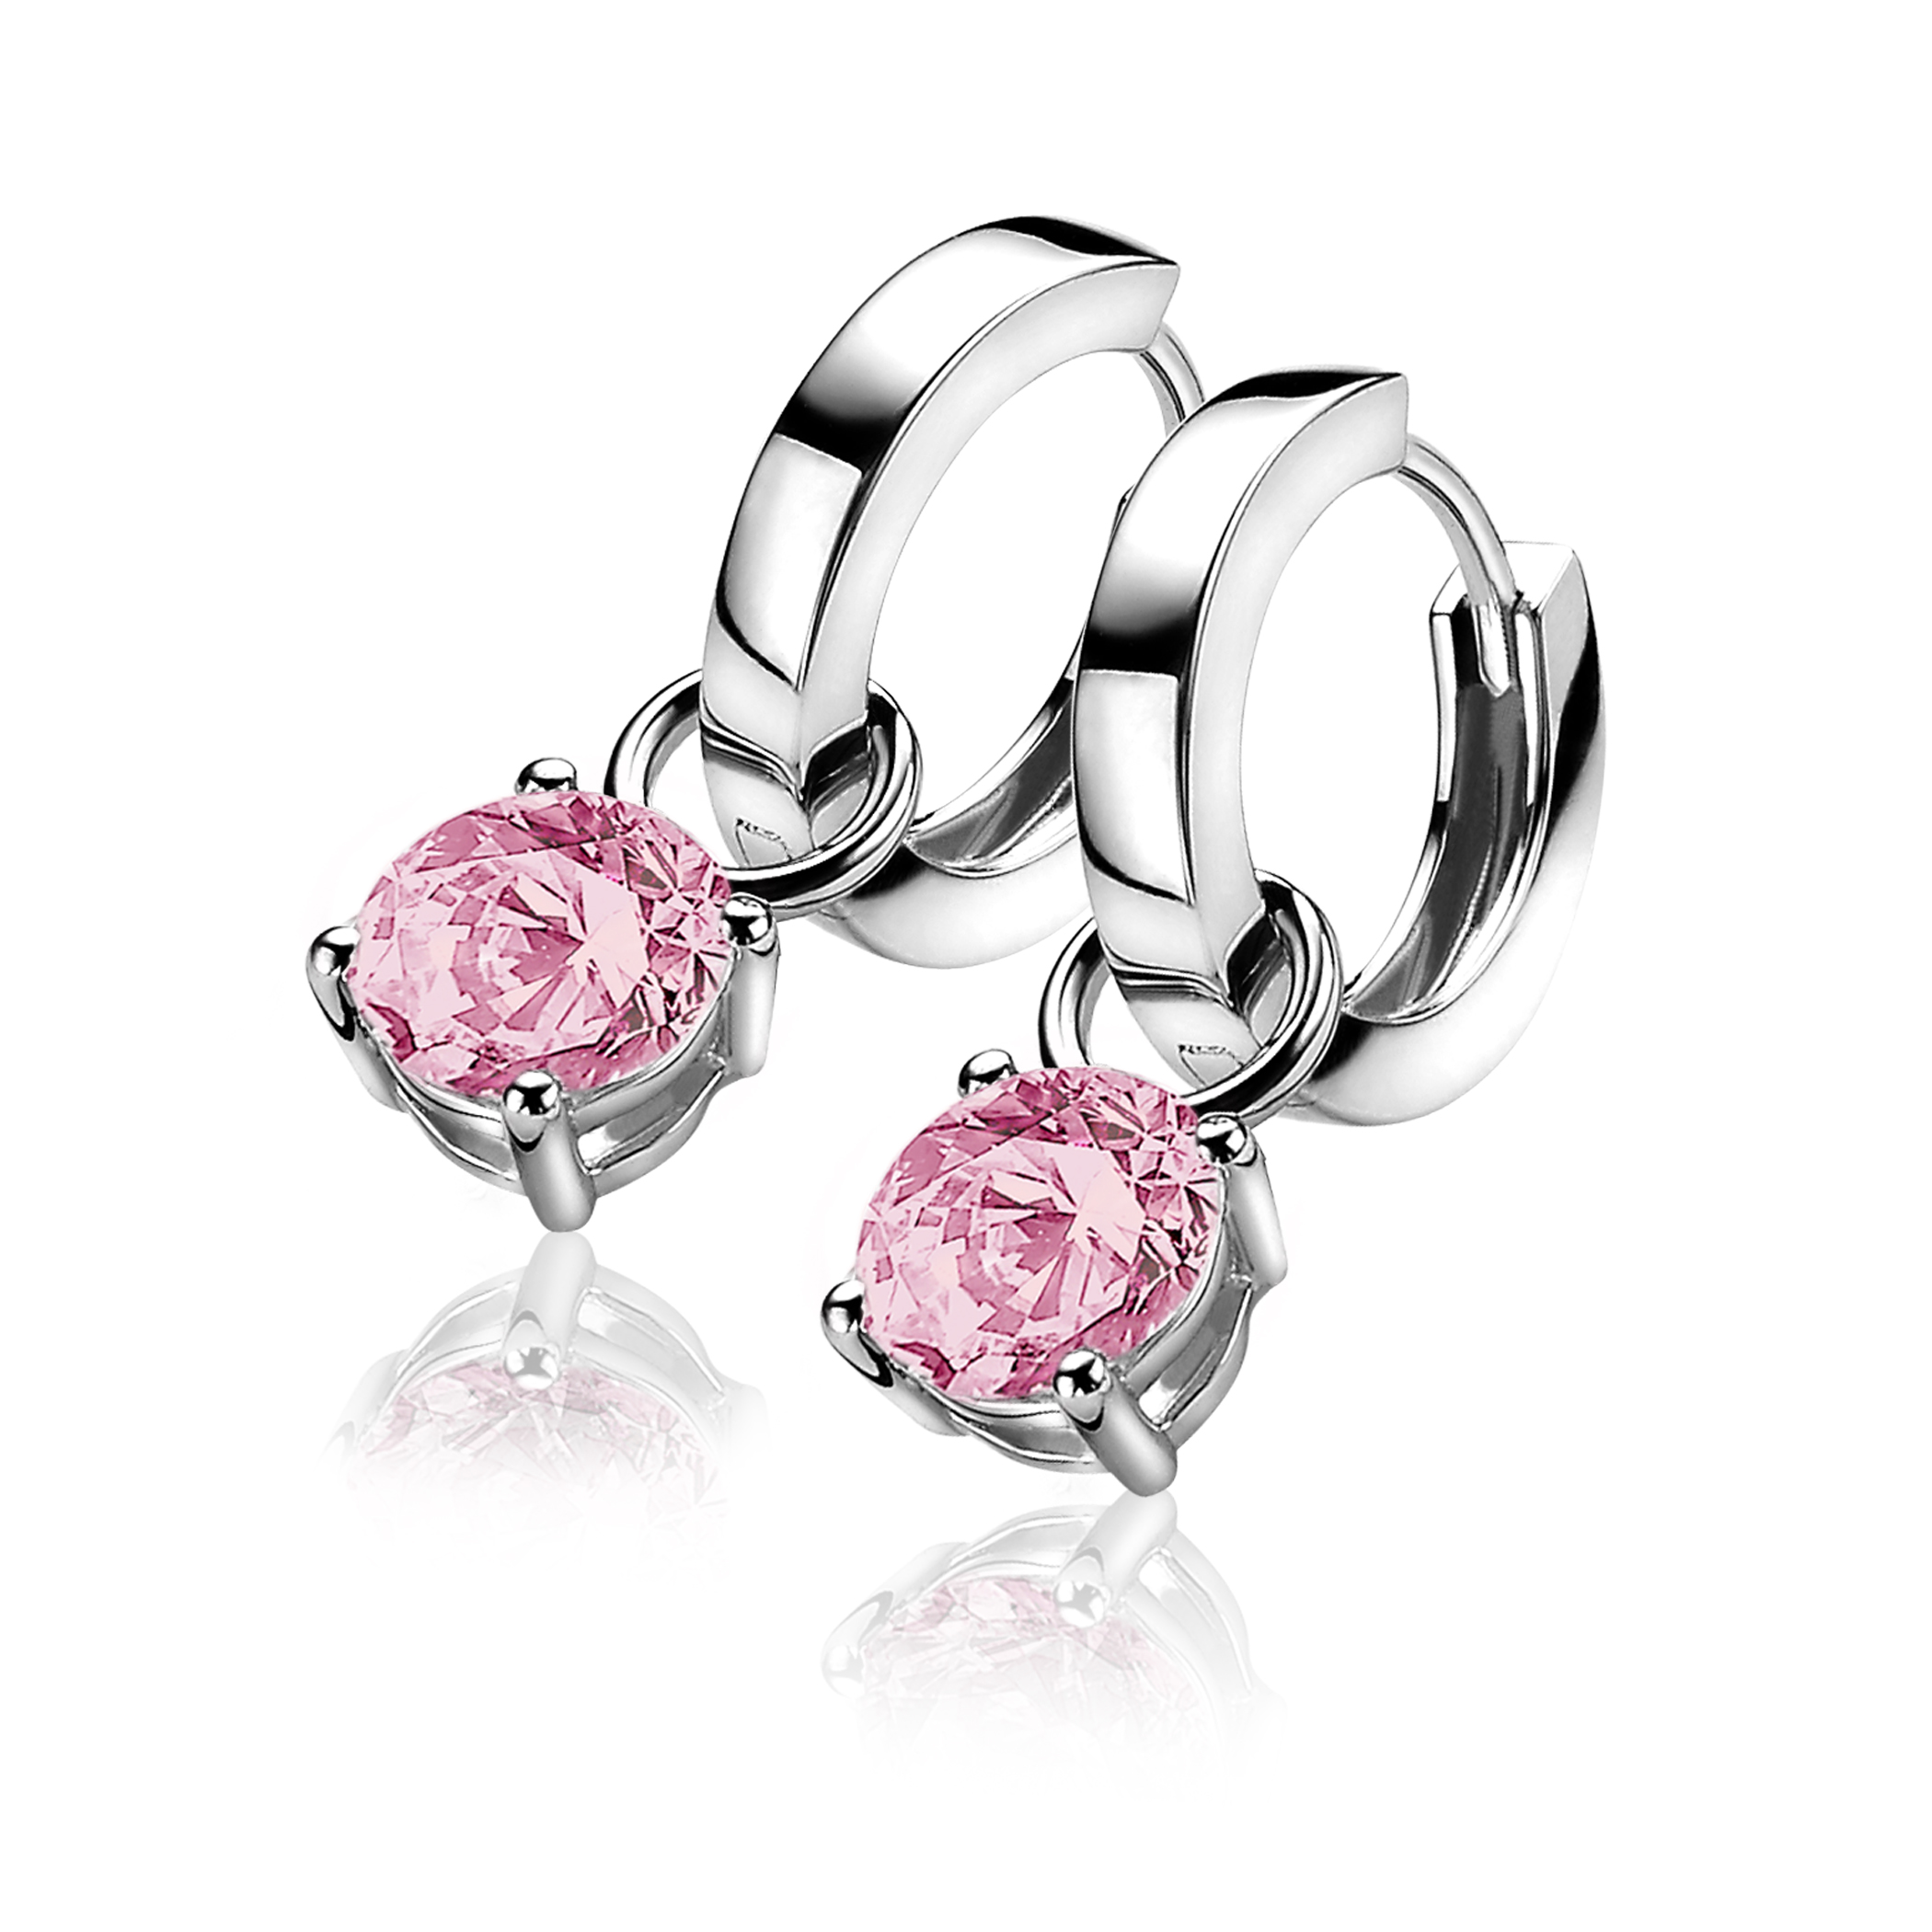 ZINZI Sterling Silver Earrings Pendants Round Pink ZICH1300R (excl. hoop earrings)